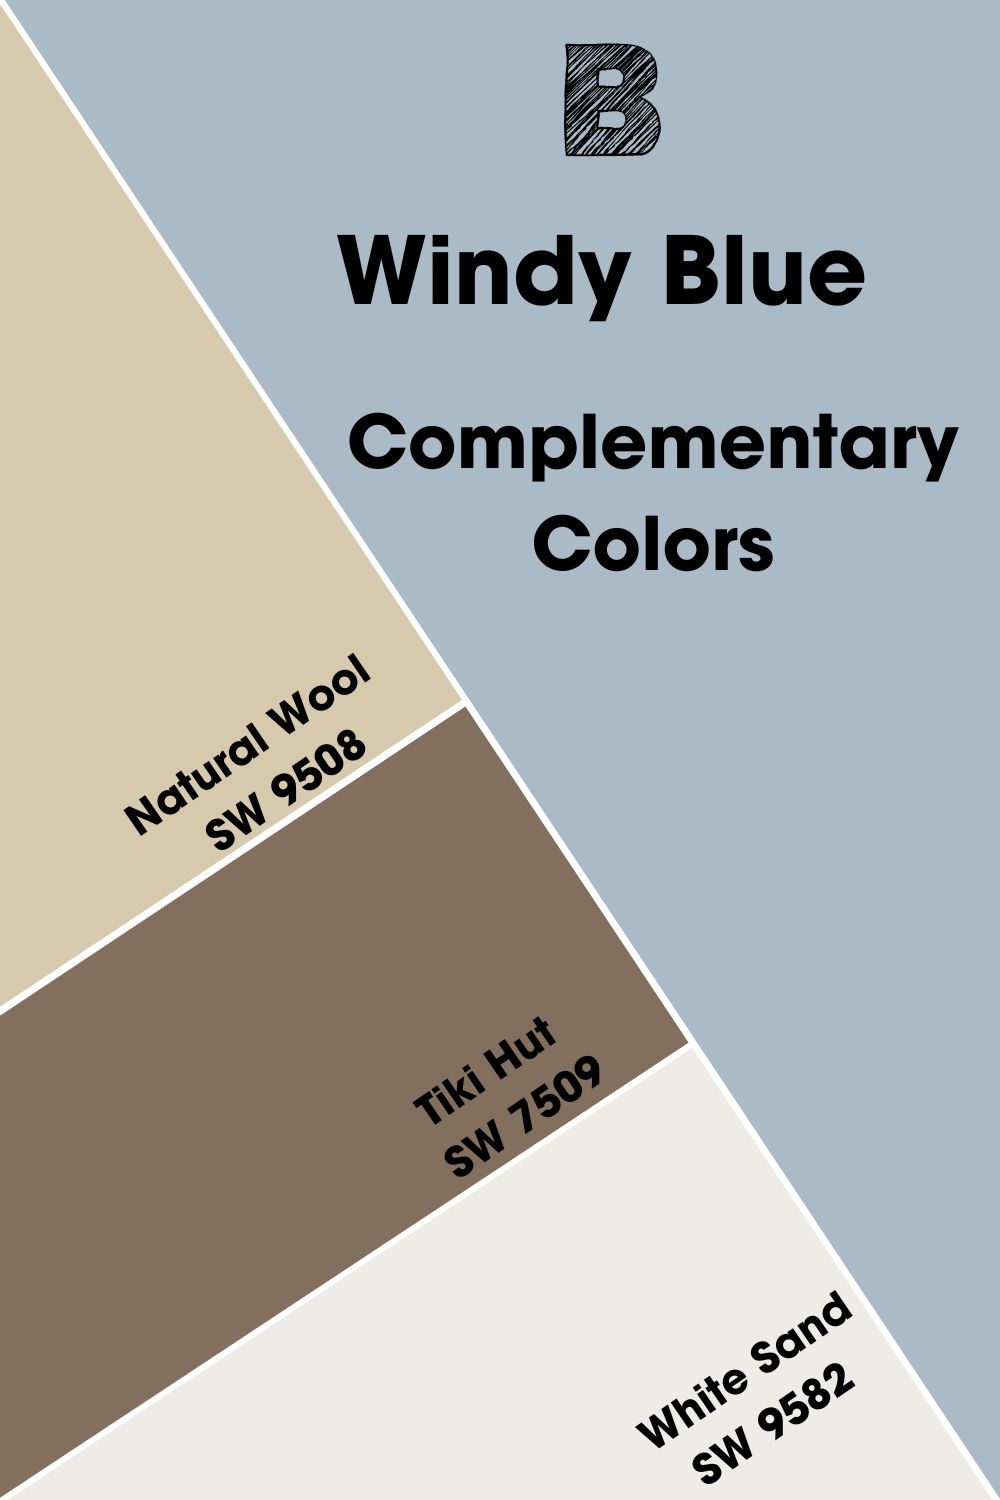 Windy Blue SW 6240 (2)